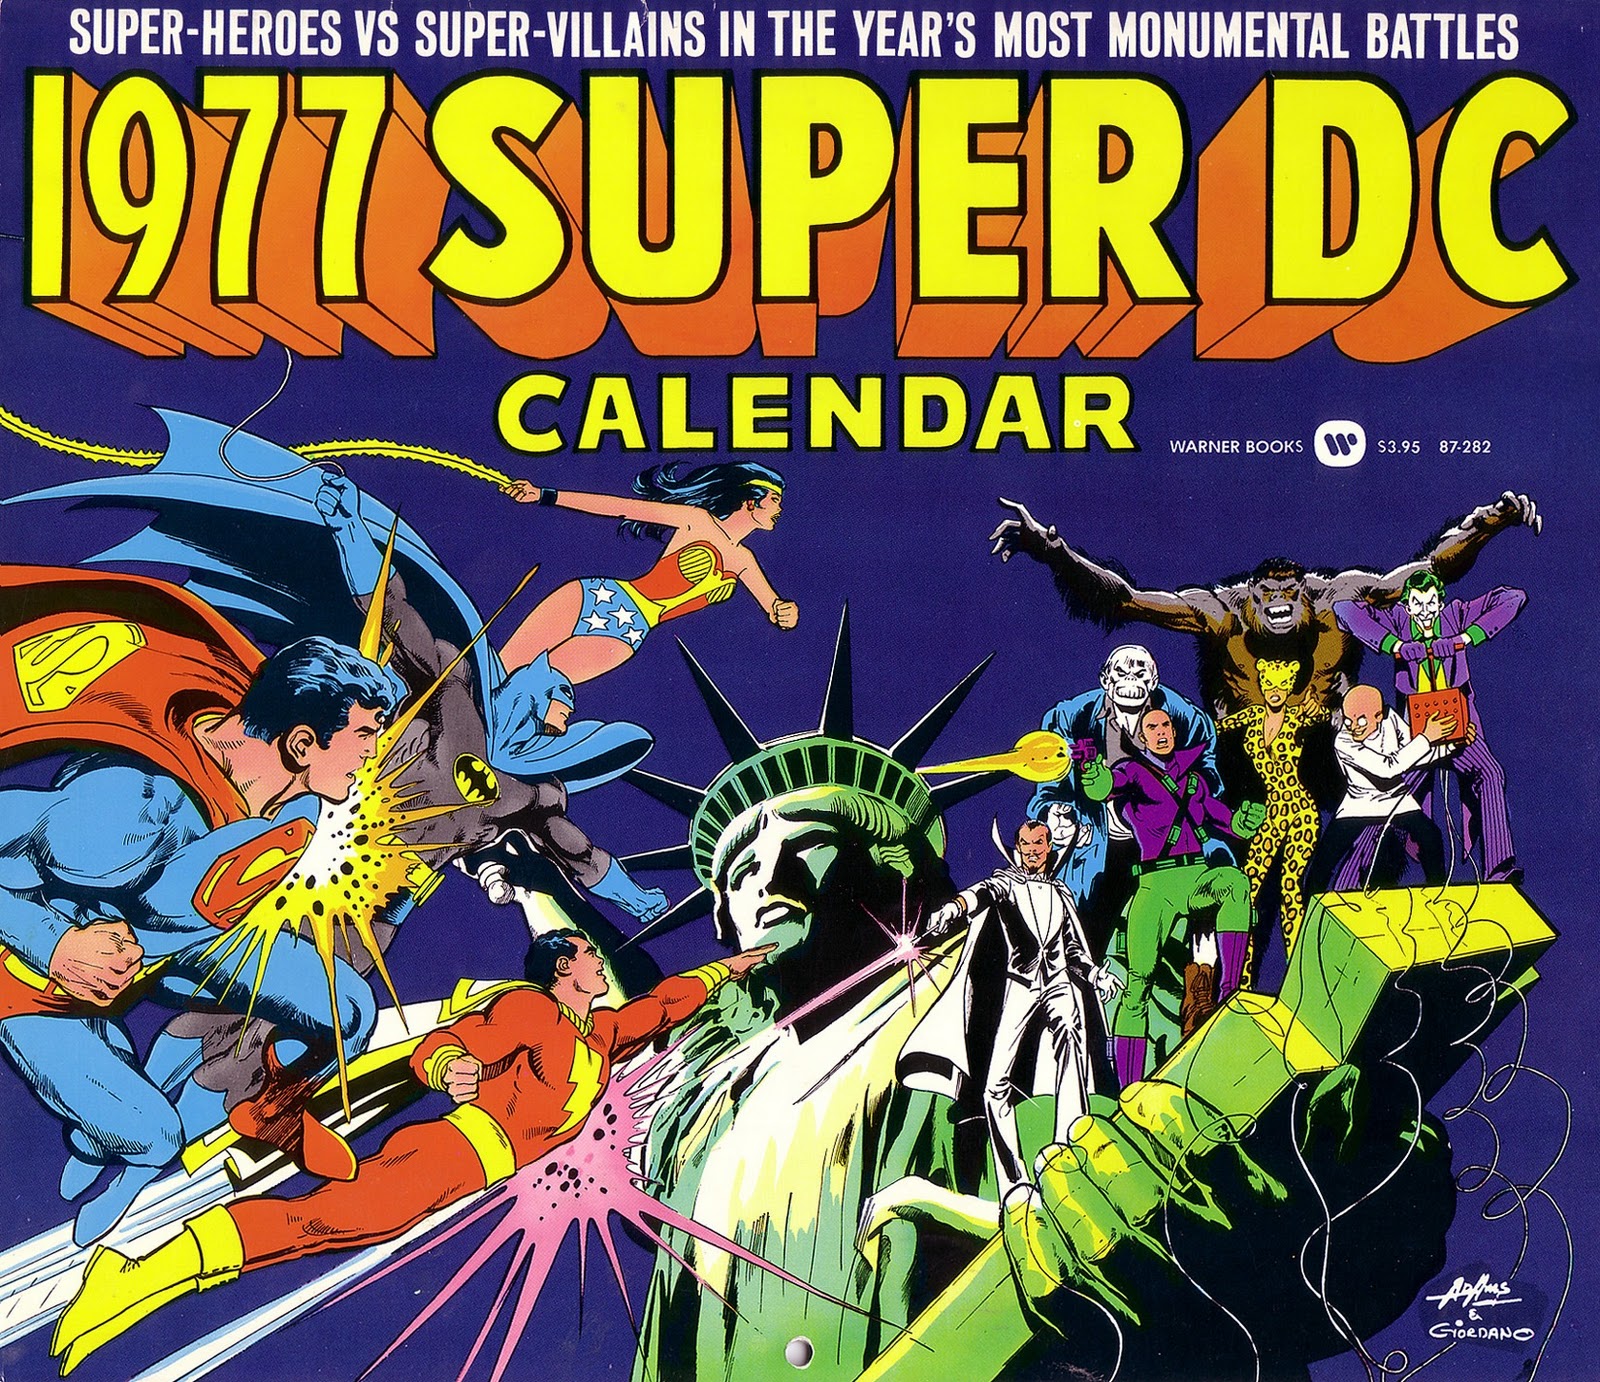 [1977_Super_DC_Calendar_-__Front_Cover[2].jpg]